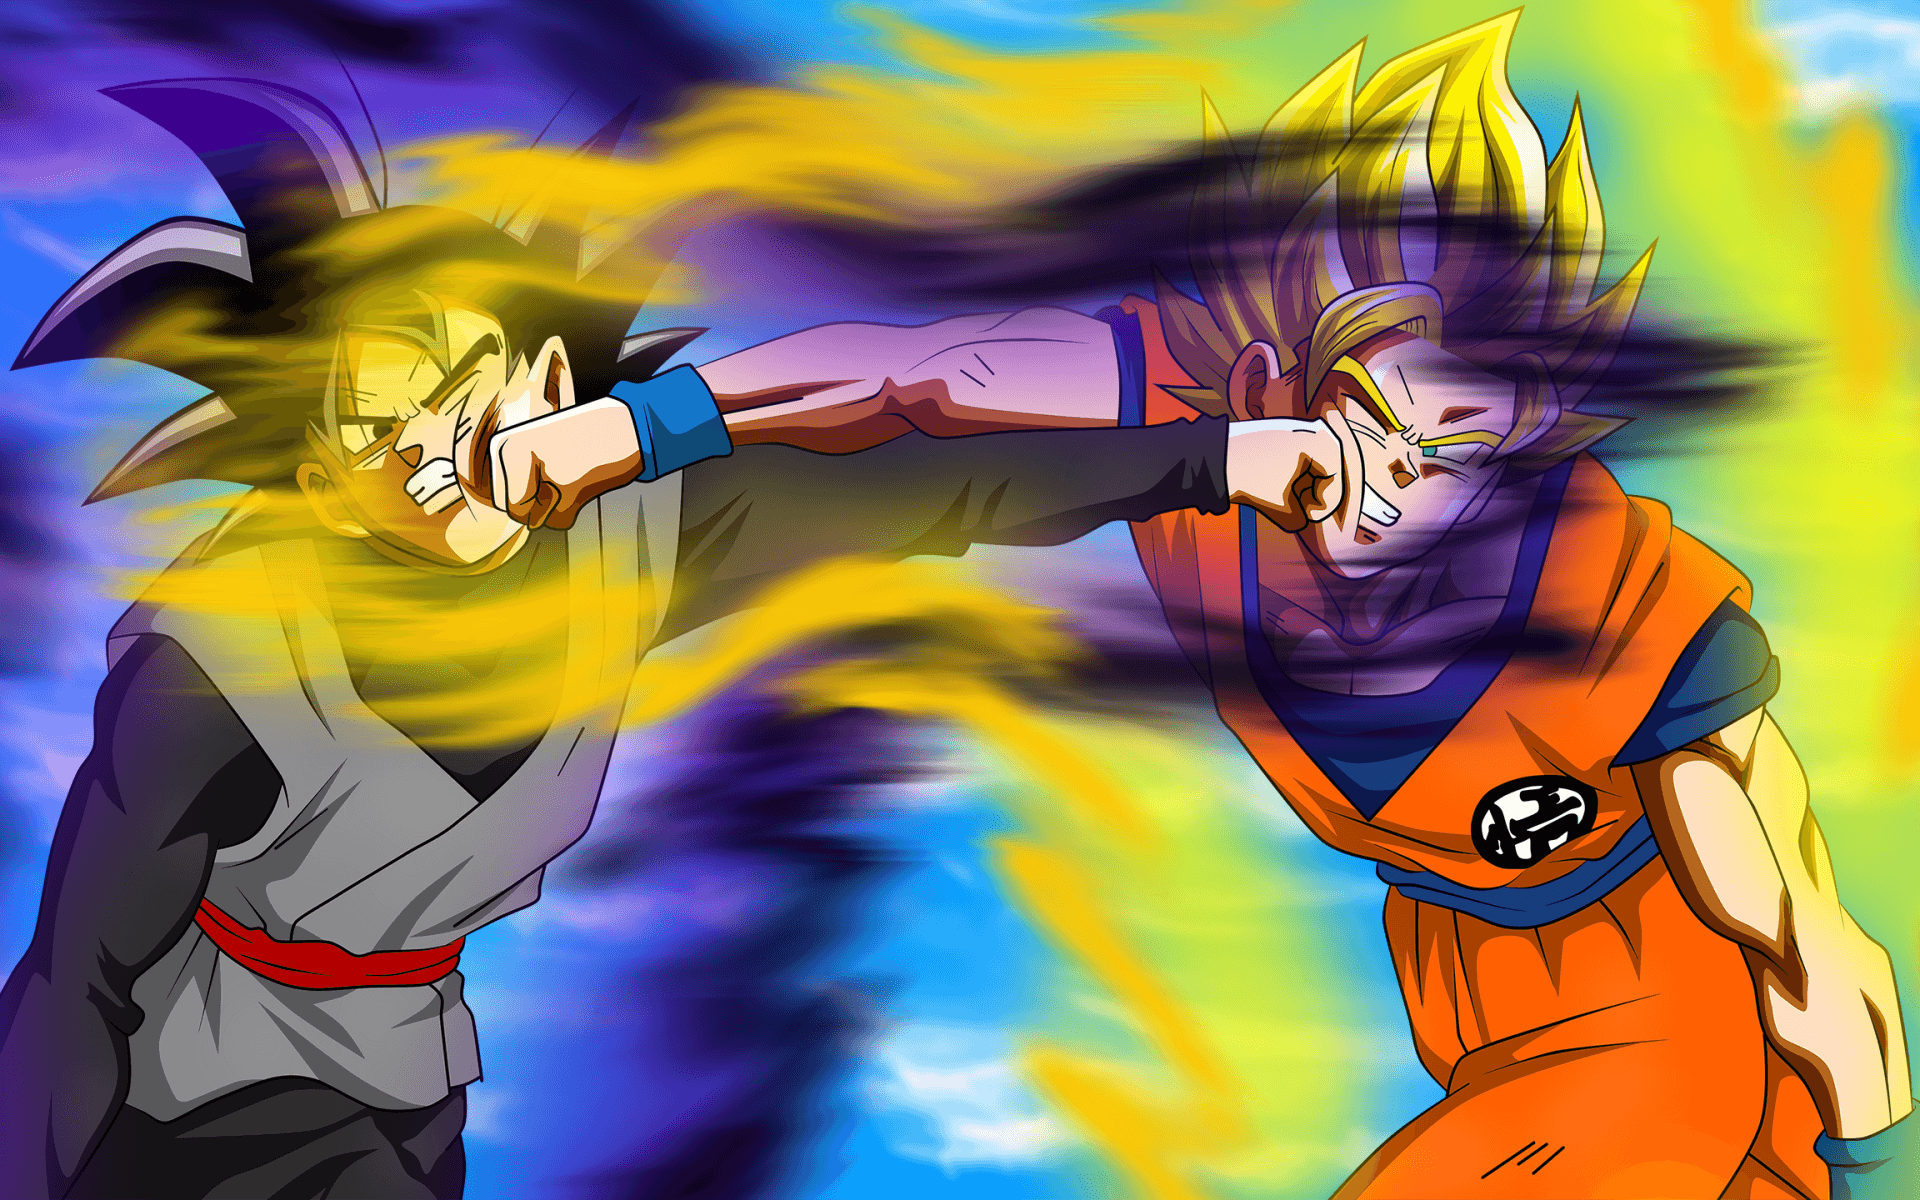 Download wallpaper Goku Black vs Goku SSJ DBS, Dragon Ball